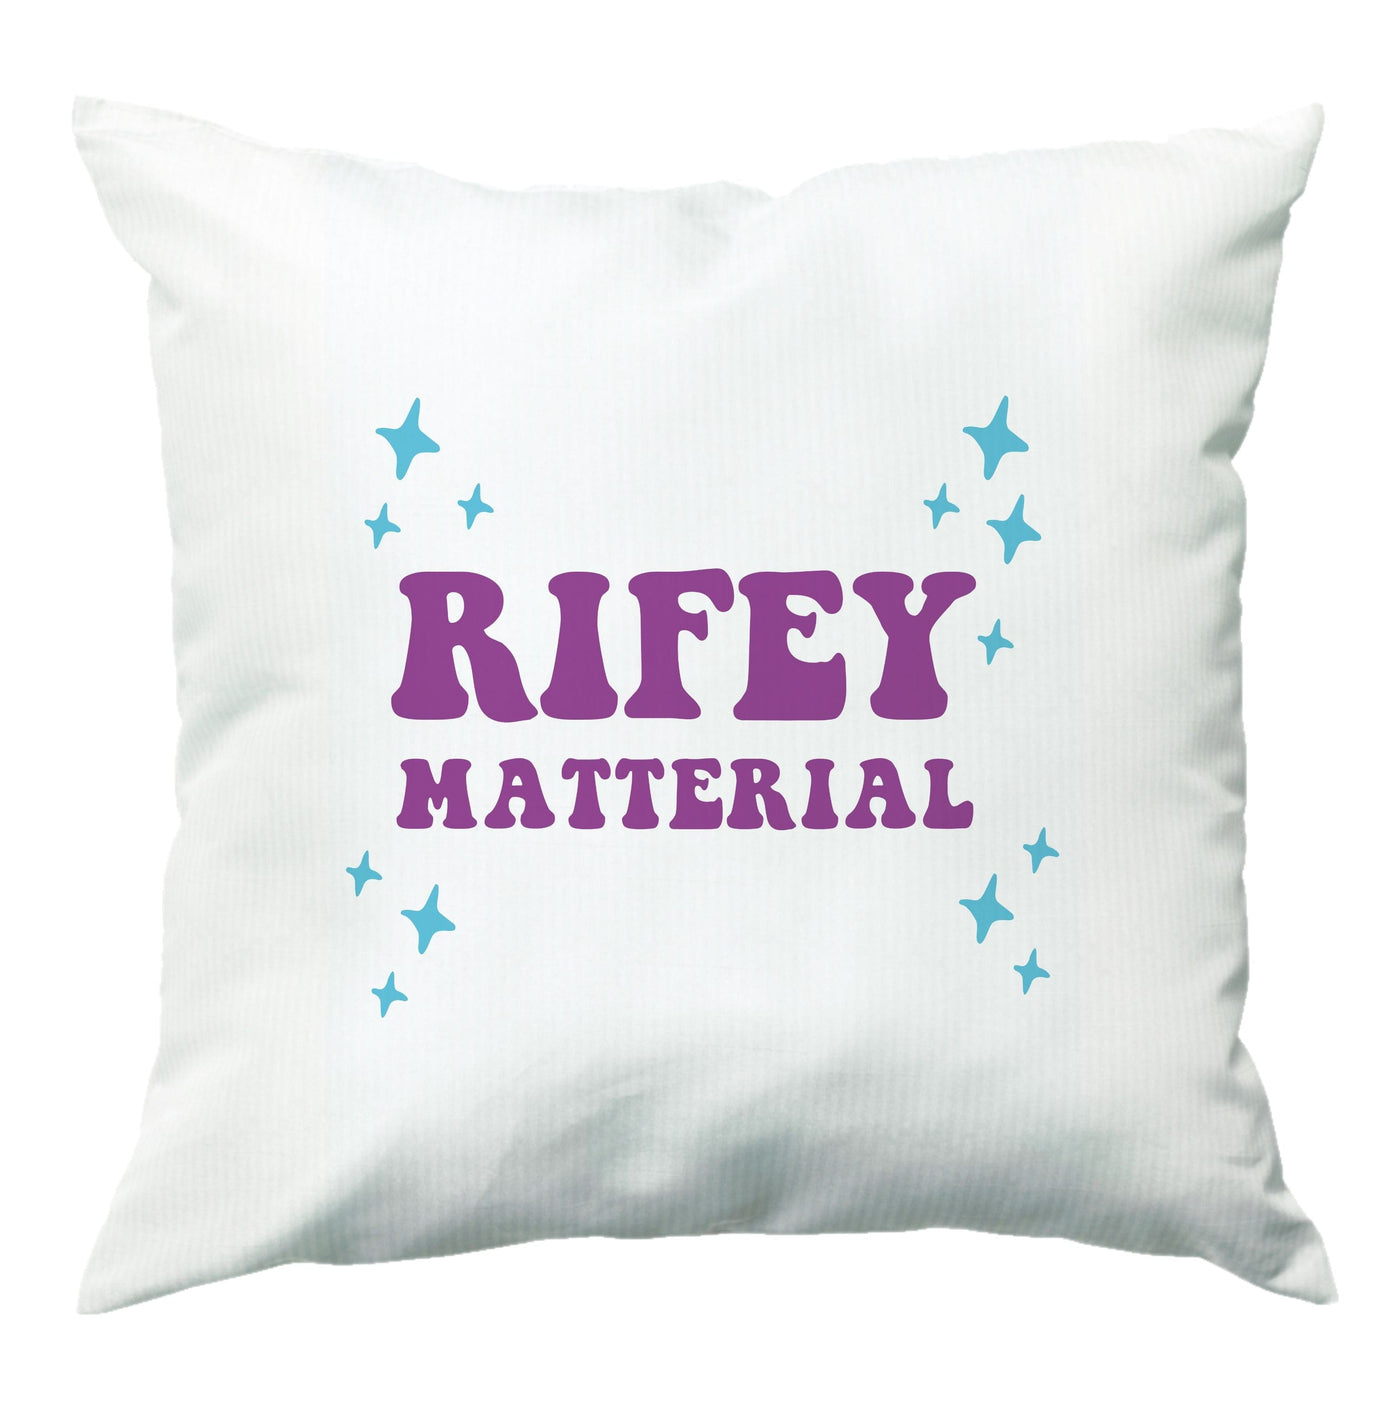 Rifey Material - Matt Rife Cushion